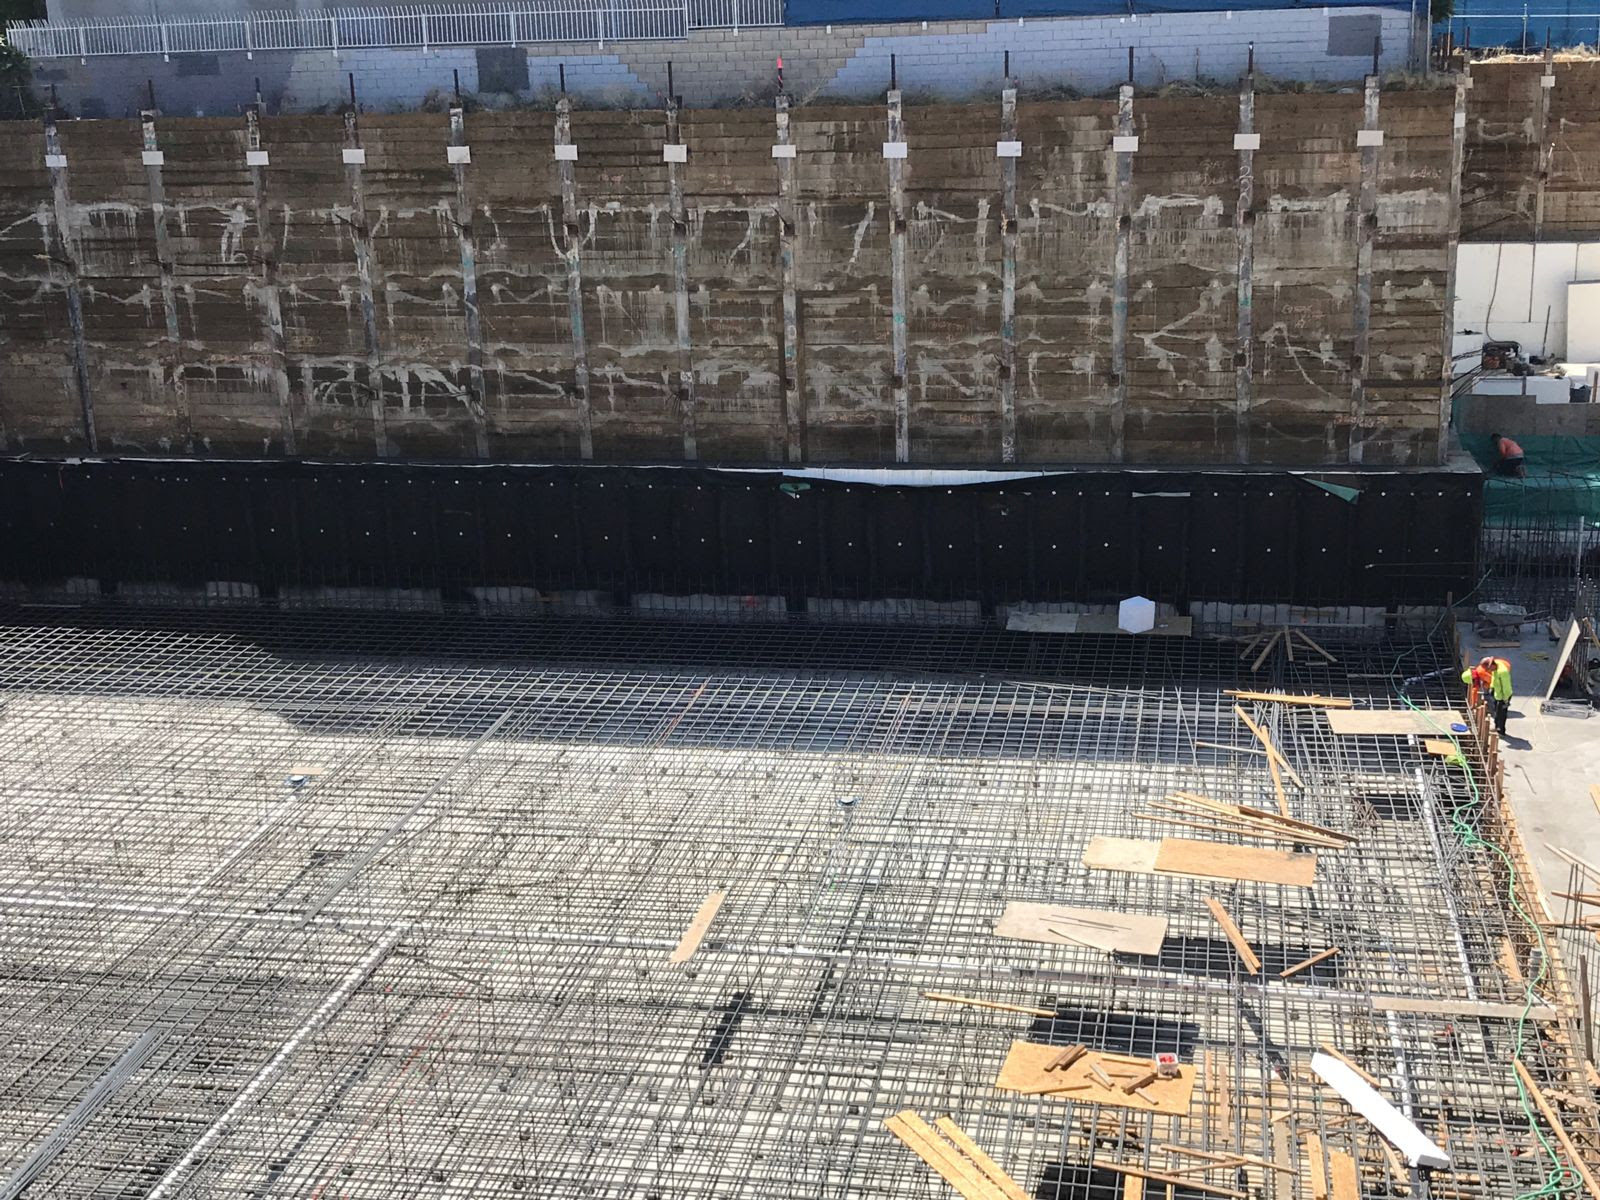 Blindside waterproofing system at construction site.